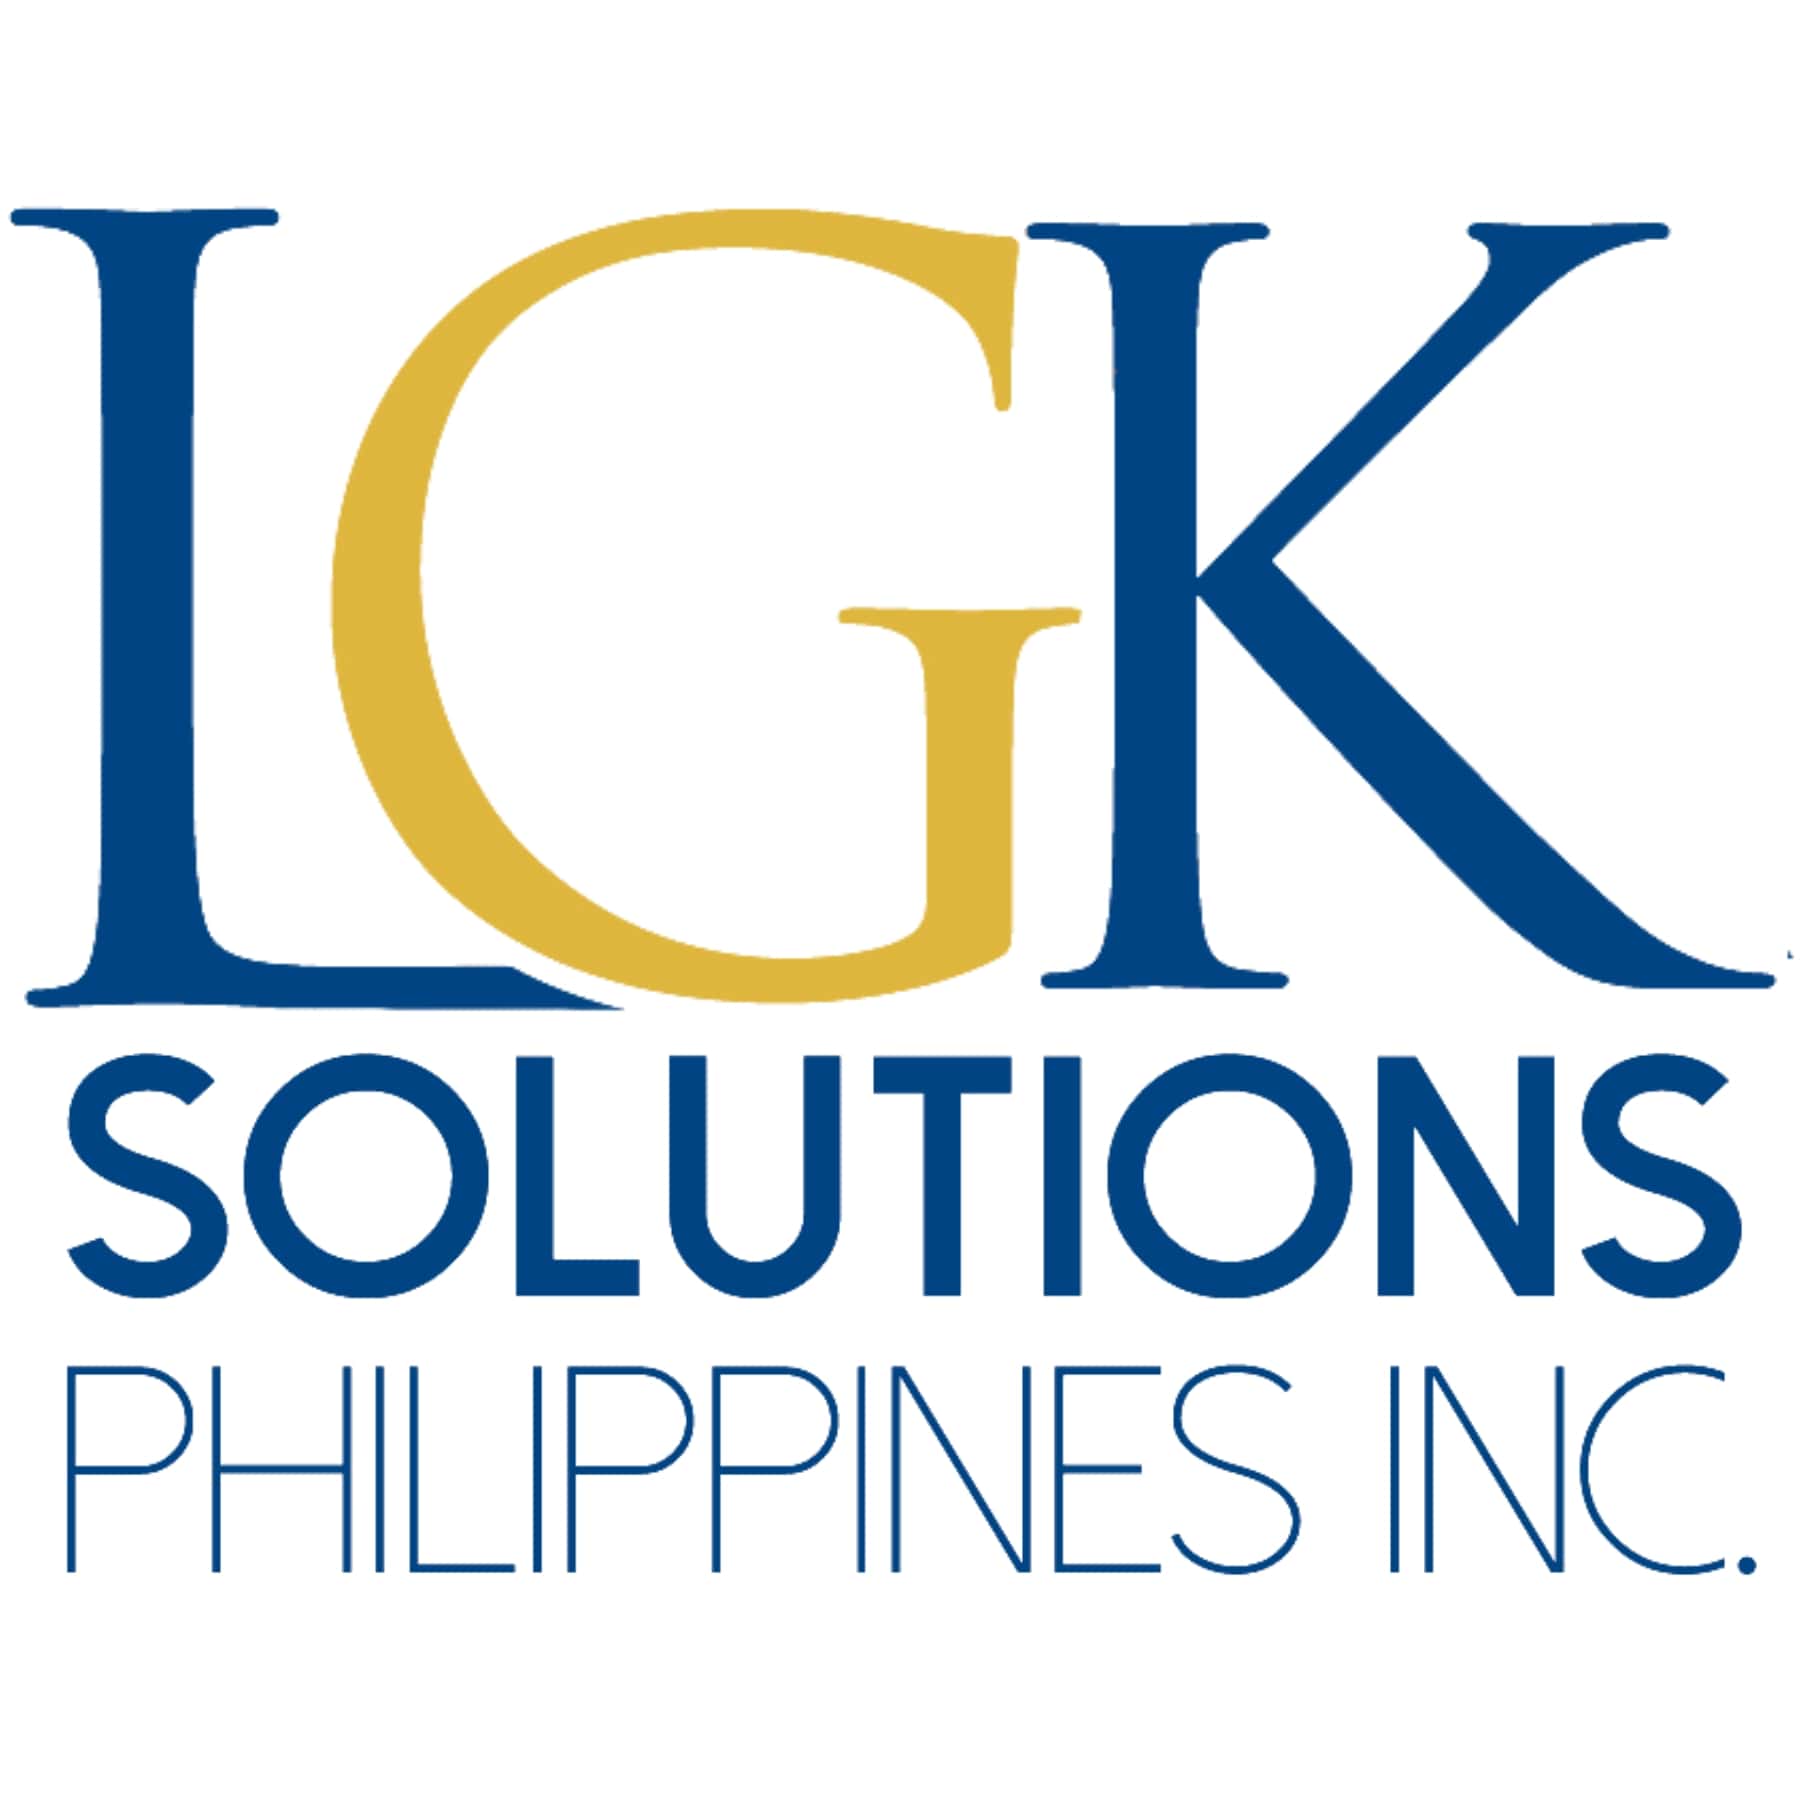 LGK Solutions Philippines Inc. 